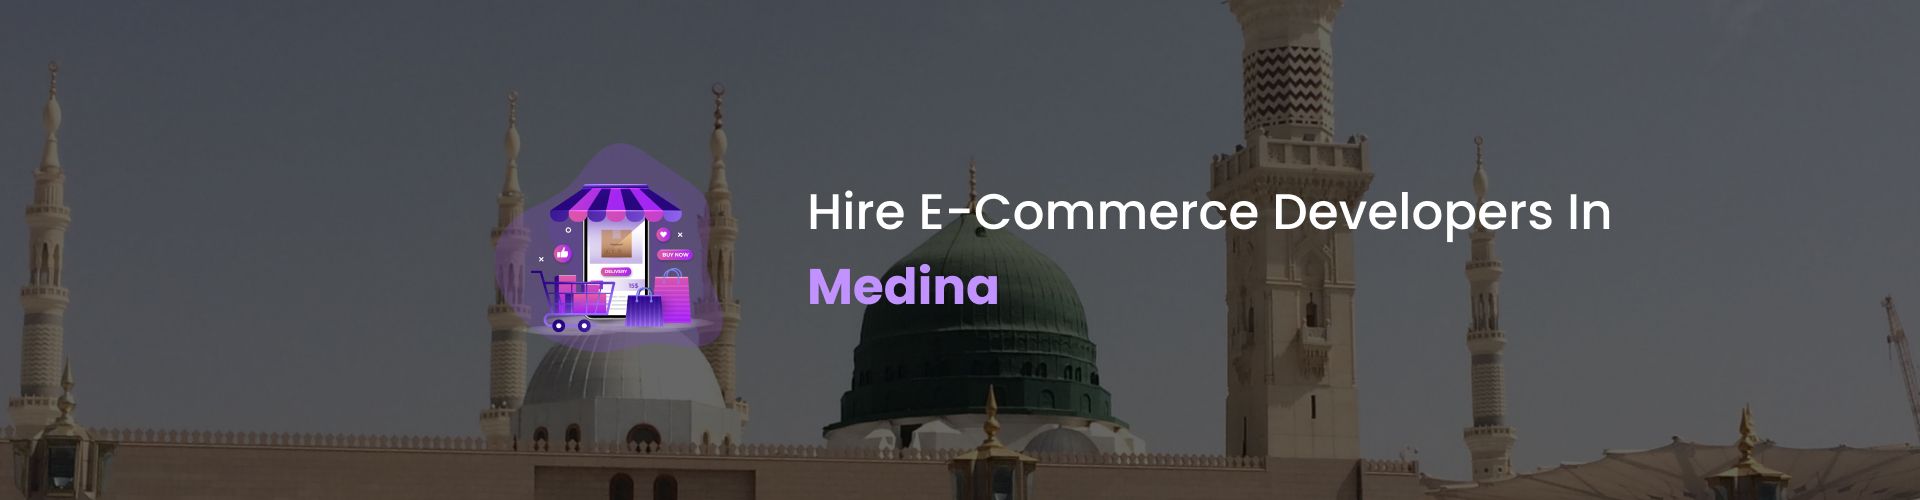 ecommerce developers medina